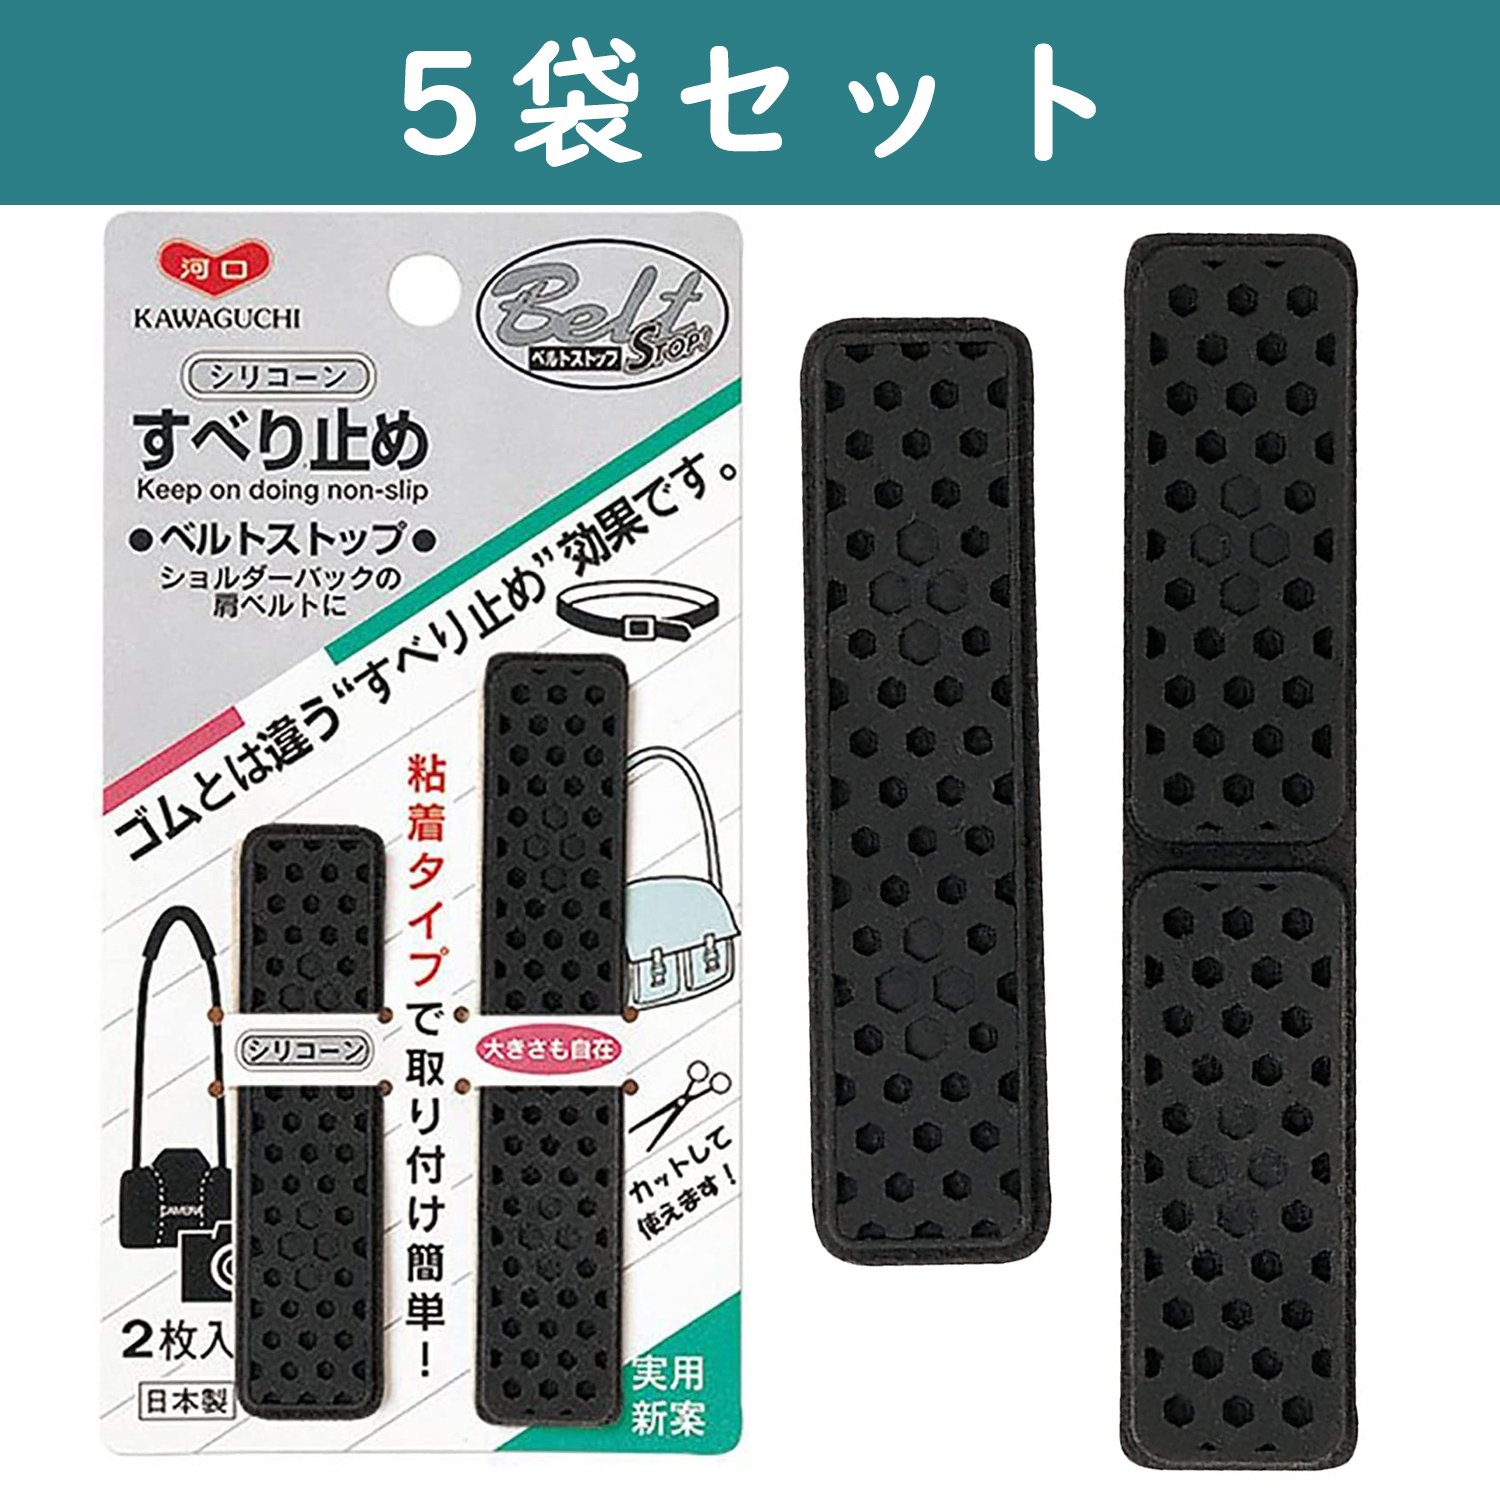 TK80024-5 KAWAGUCHI Belt Stop Silicone Anti-Slip Adhesive Type 2 pcs x 5 Bags Set Black (Set)